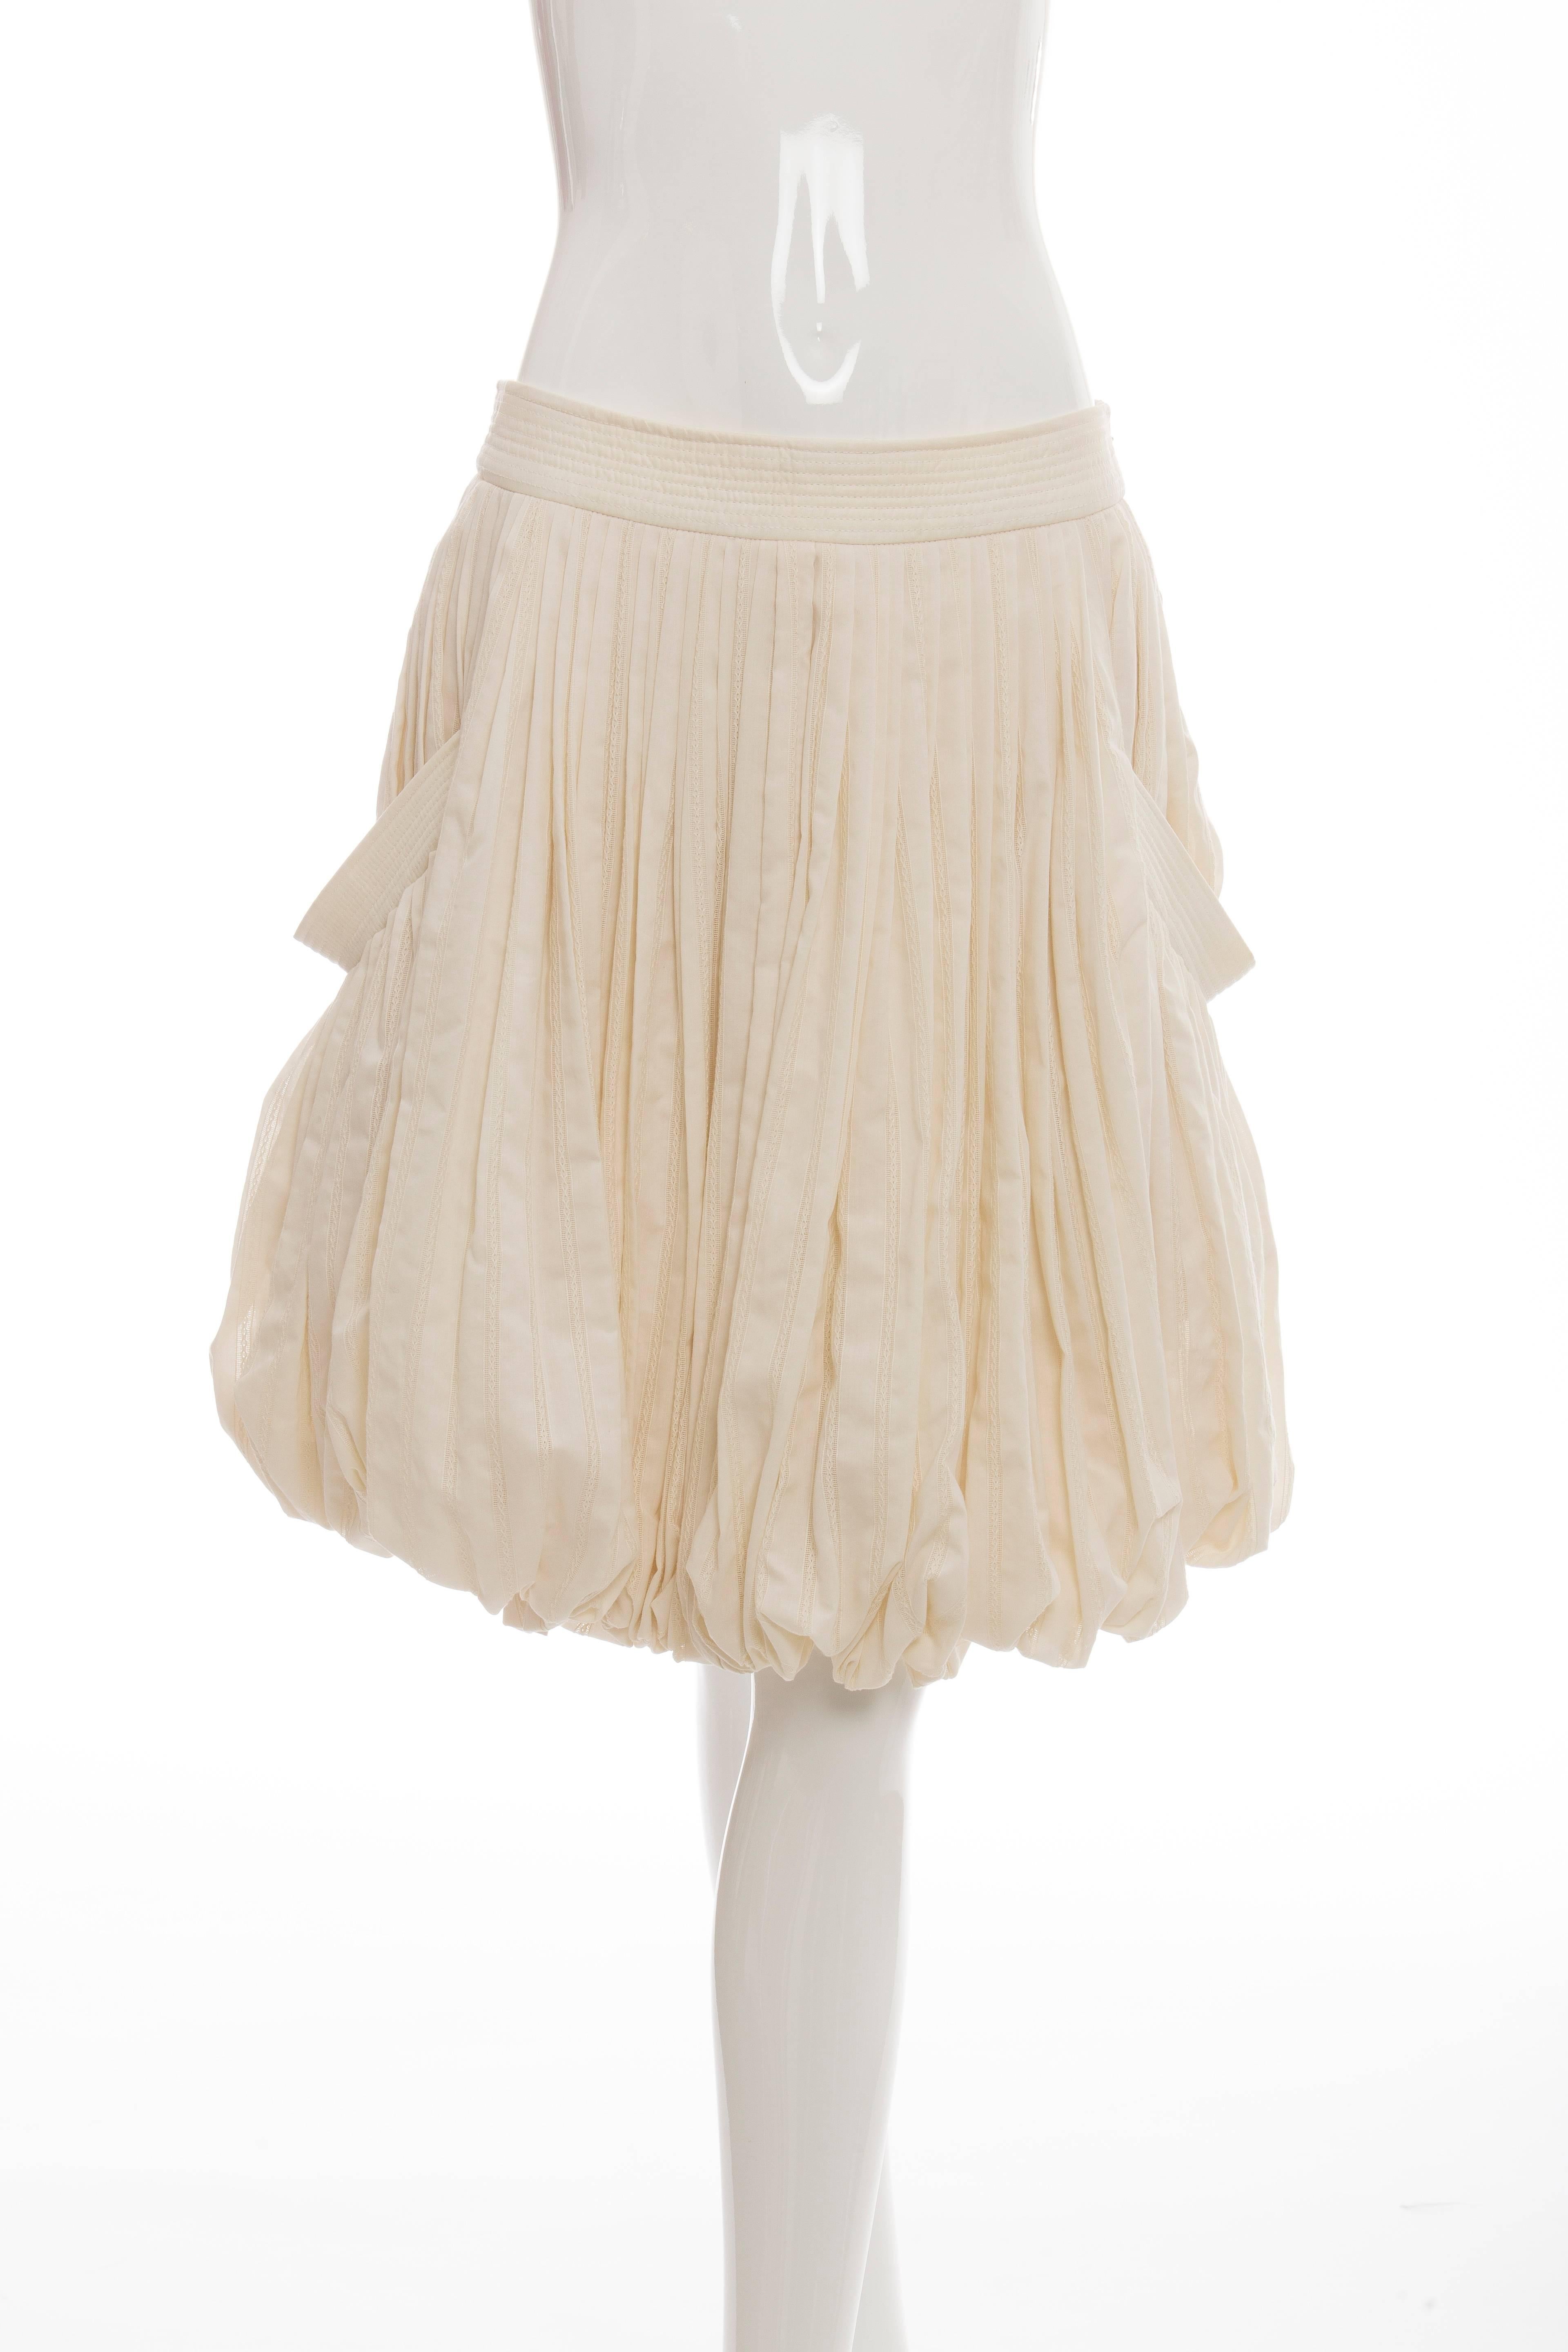 Beige Alexander McQueen Cream Pleated Cotton Skirt Two Deep Pockets, Spring 2006